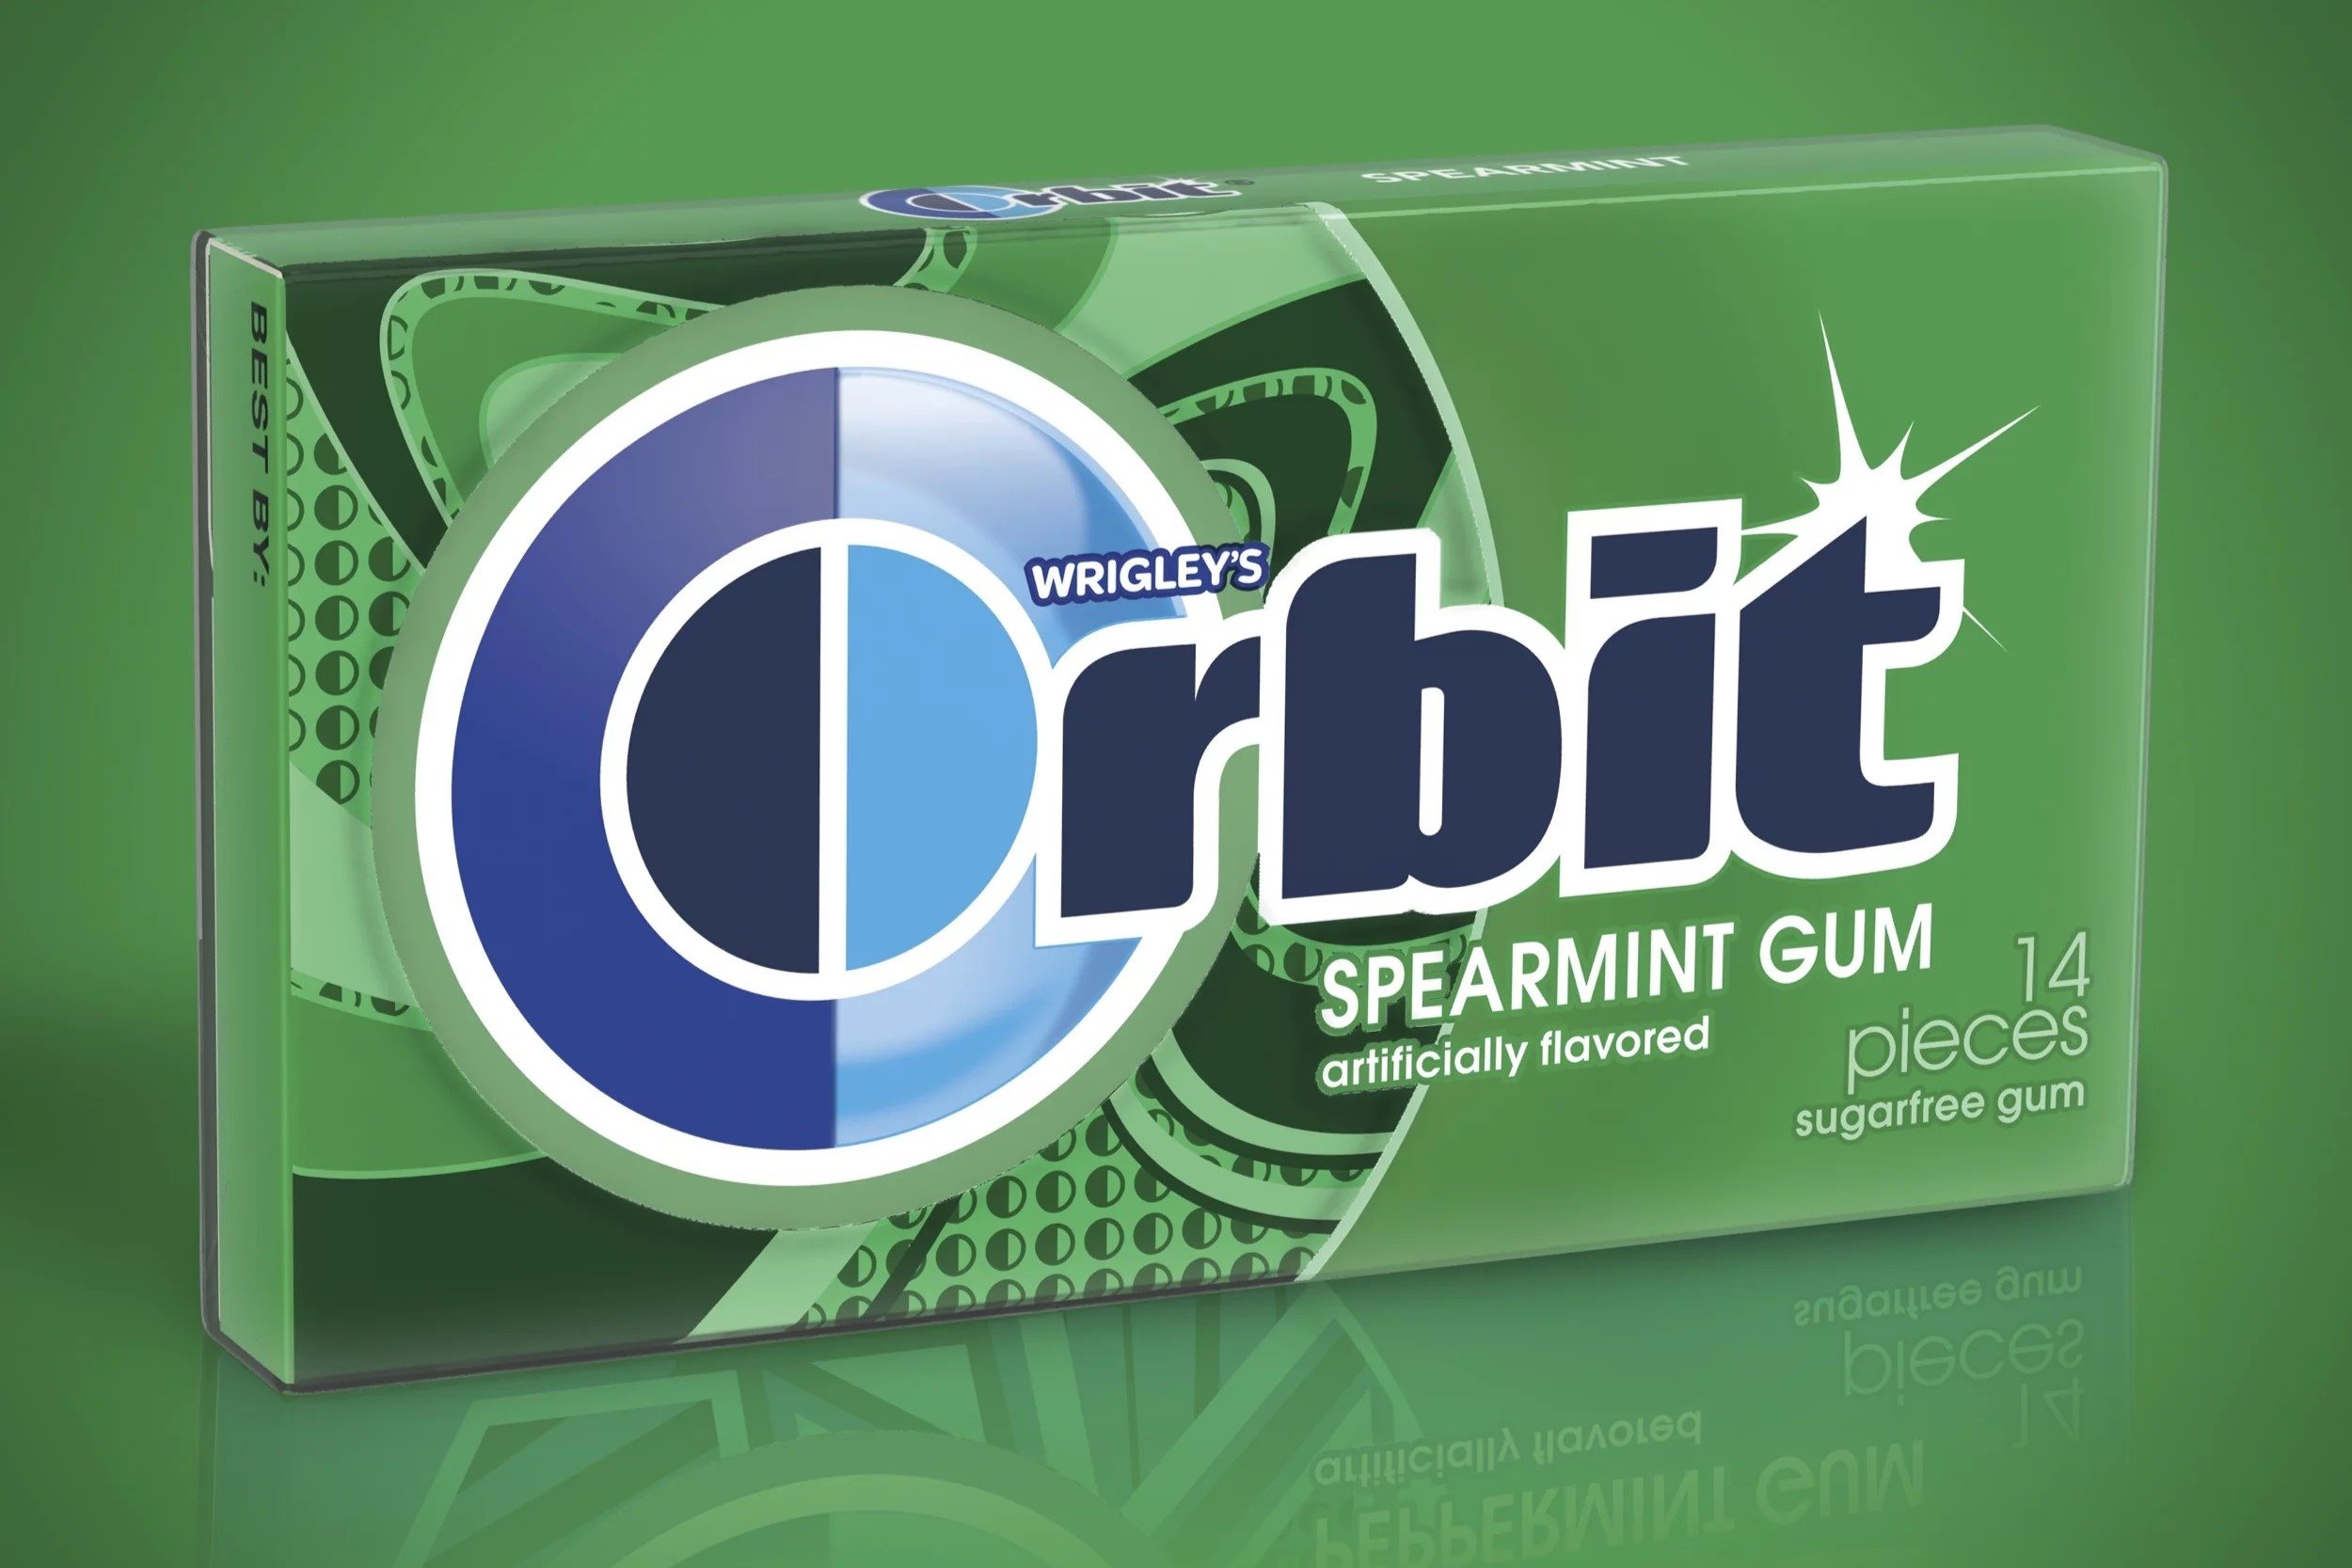 20-orbit-spearmint-nutrition-facts